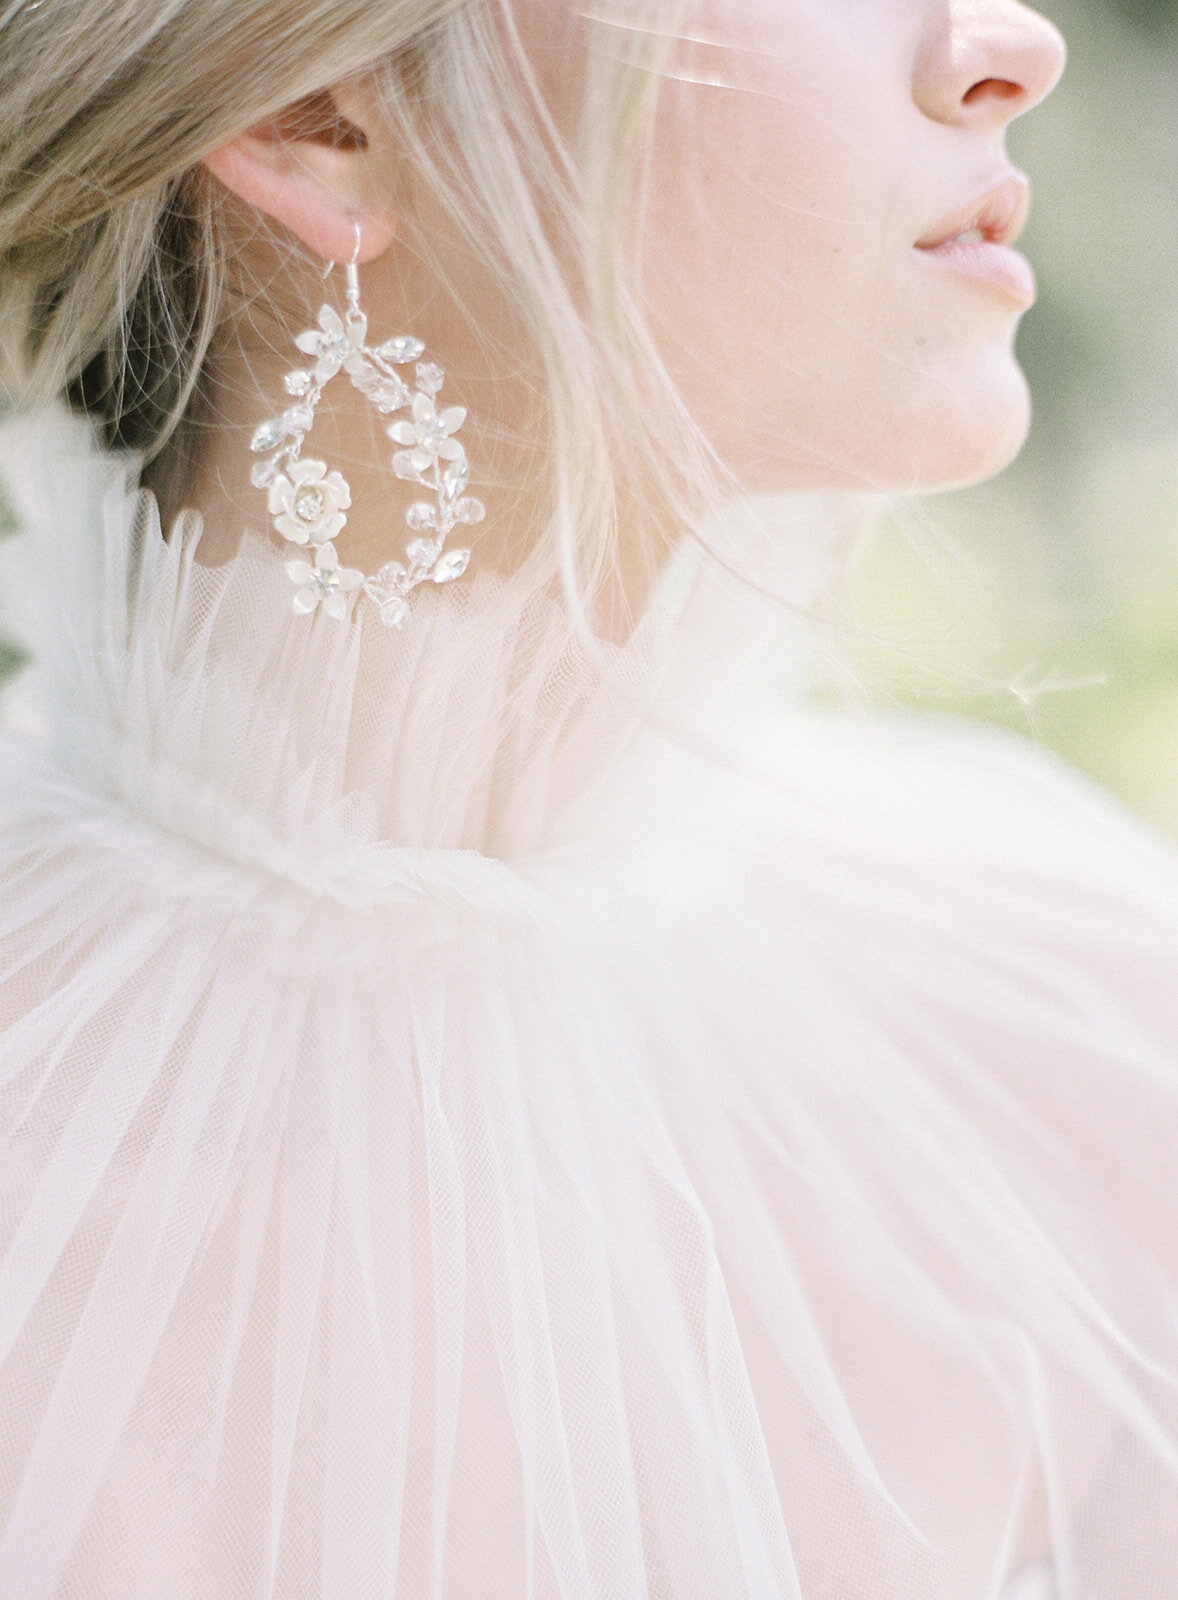 couture-bridal-dress-earrings.jpg